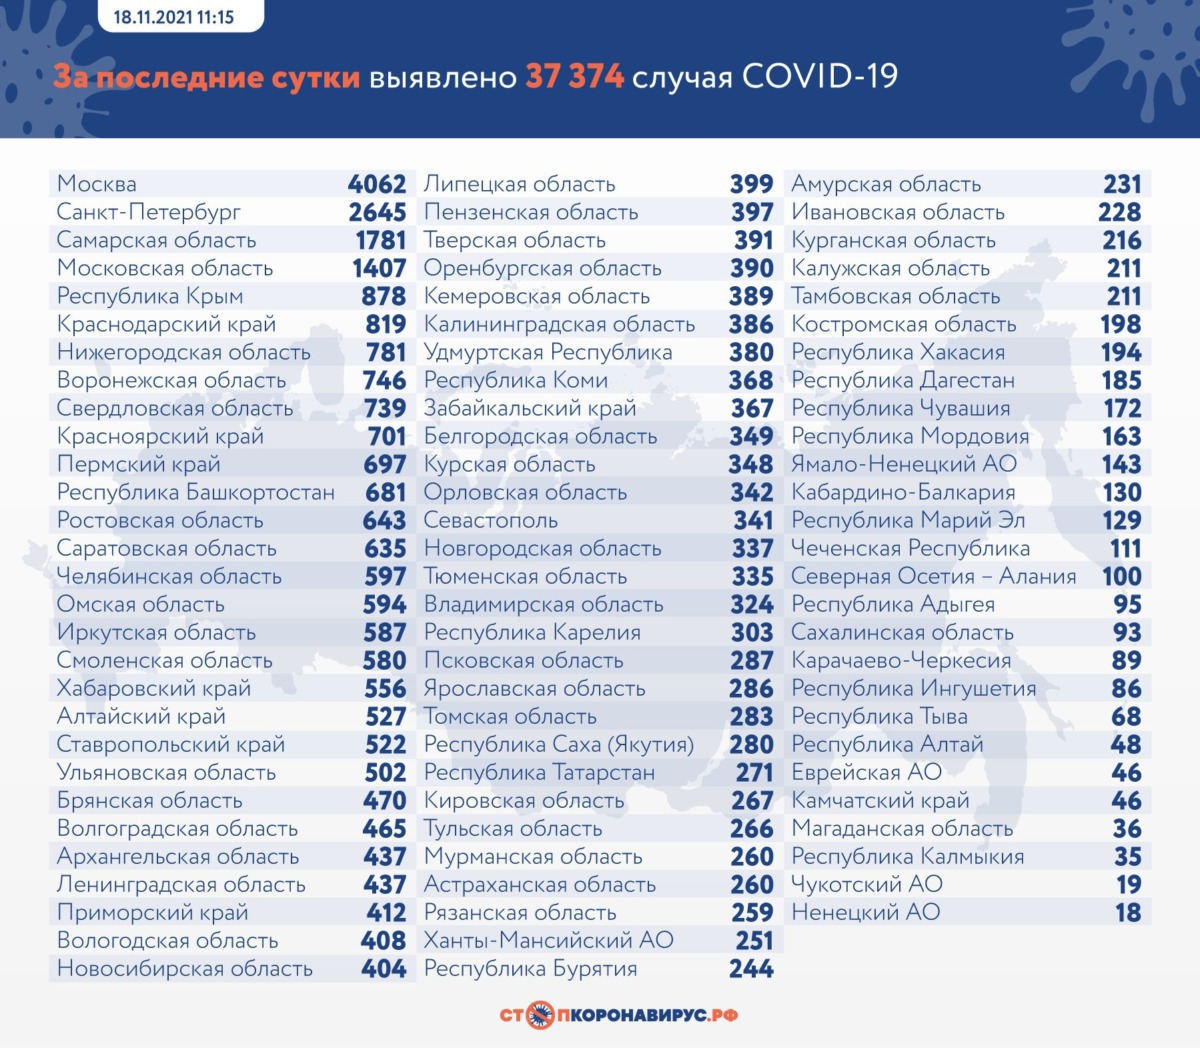 Оперативная статистика по коронавирусу в России на 18 ноября